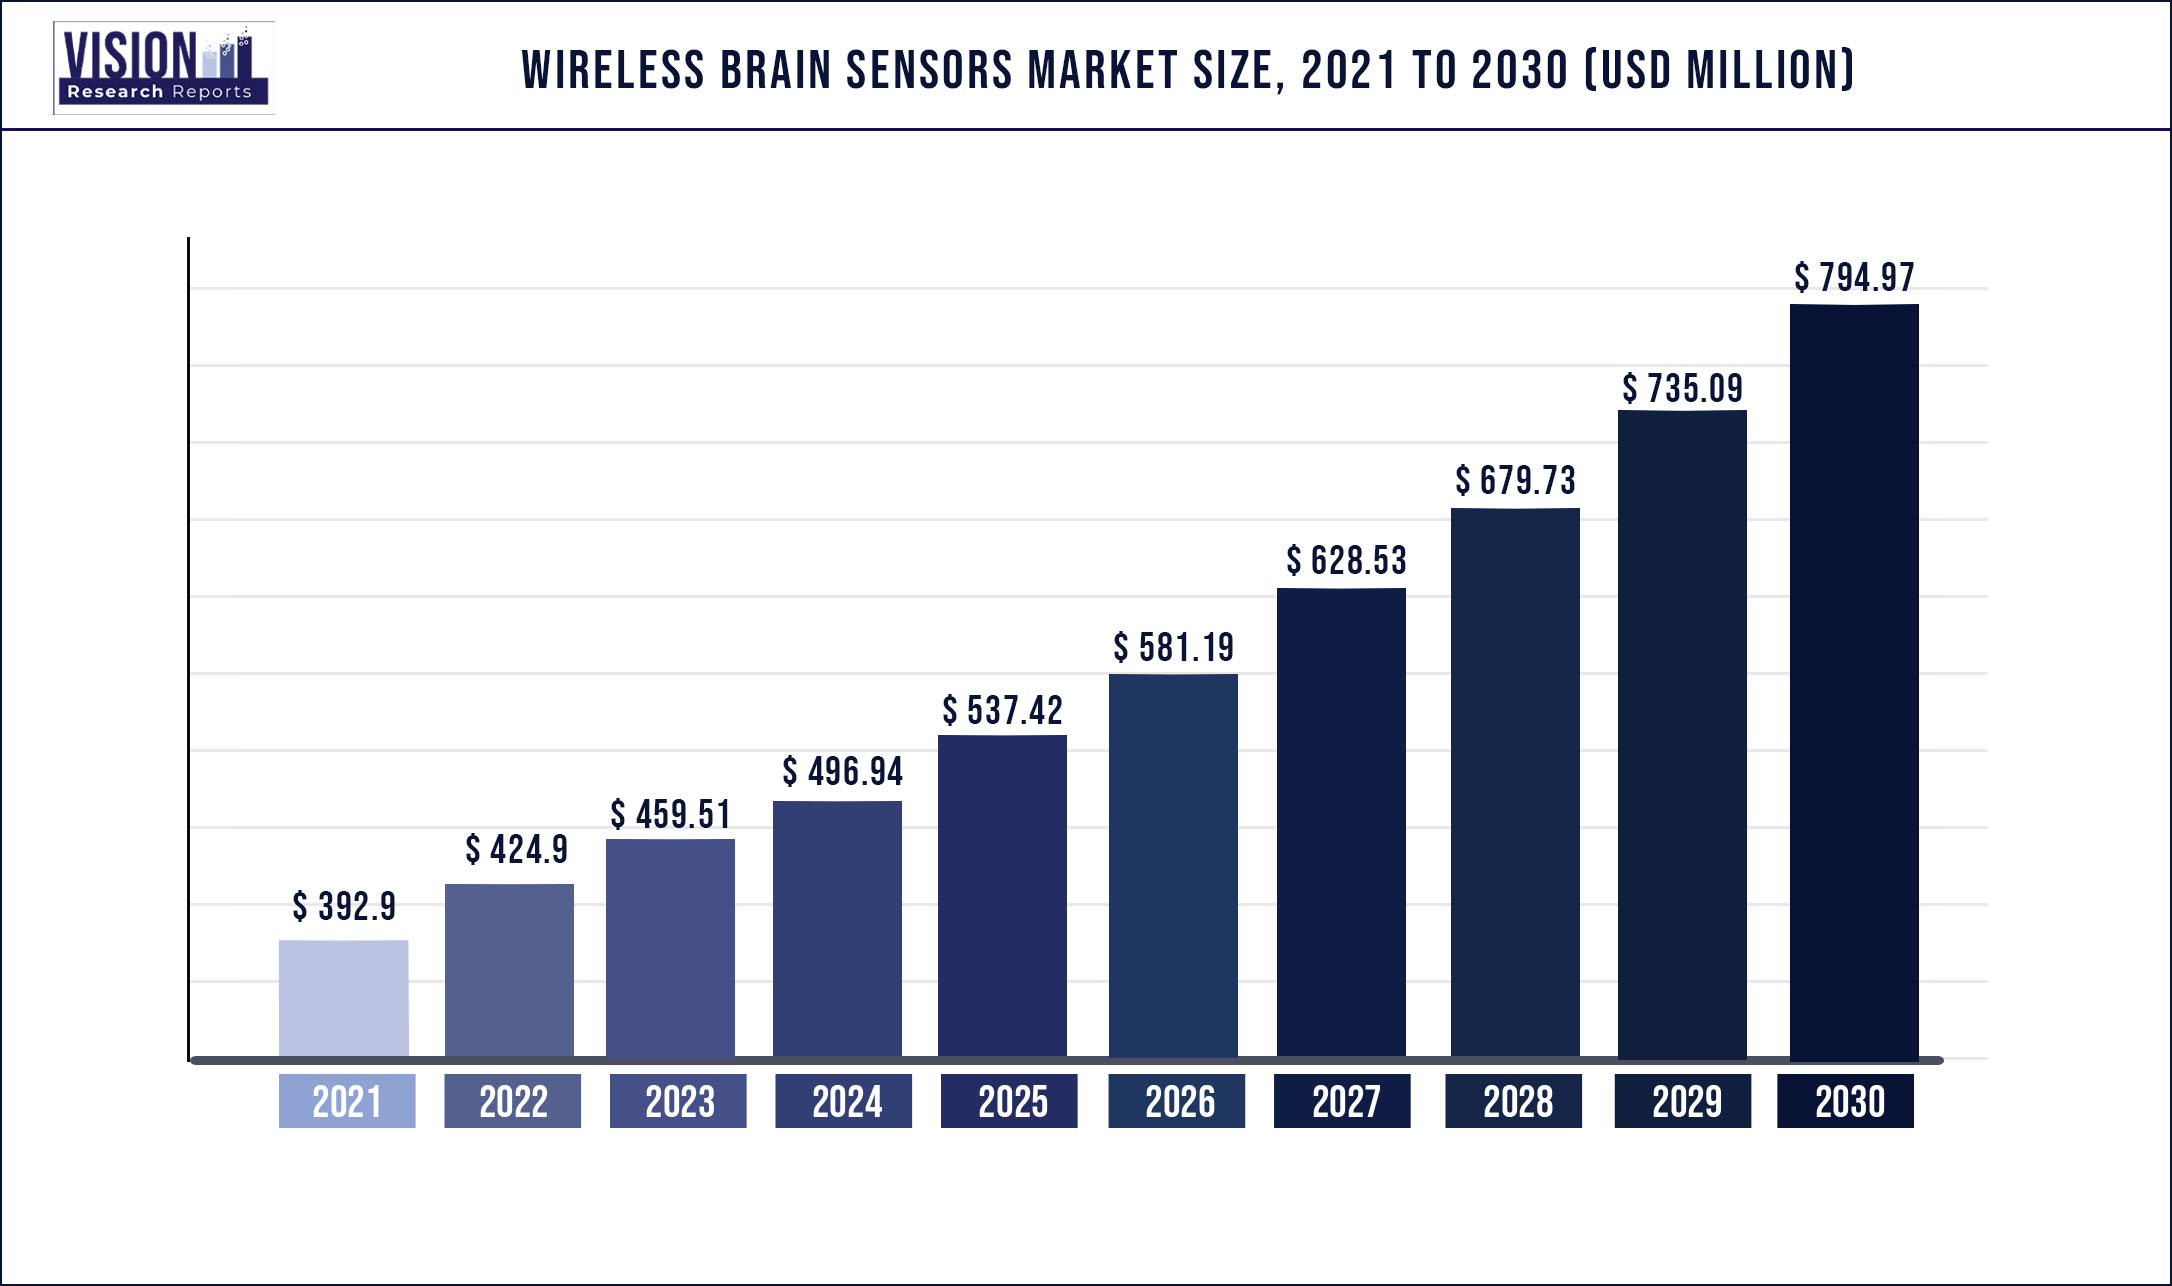 Wireless Brain Sensors Market Size 2021 to 2030